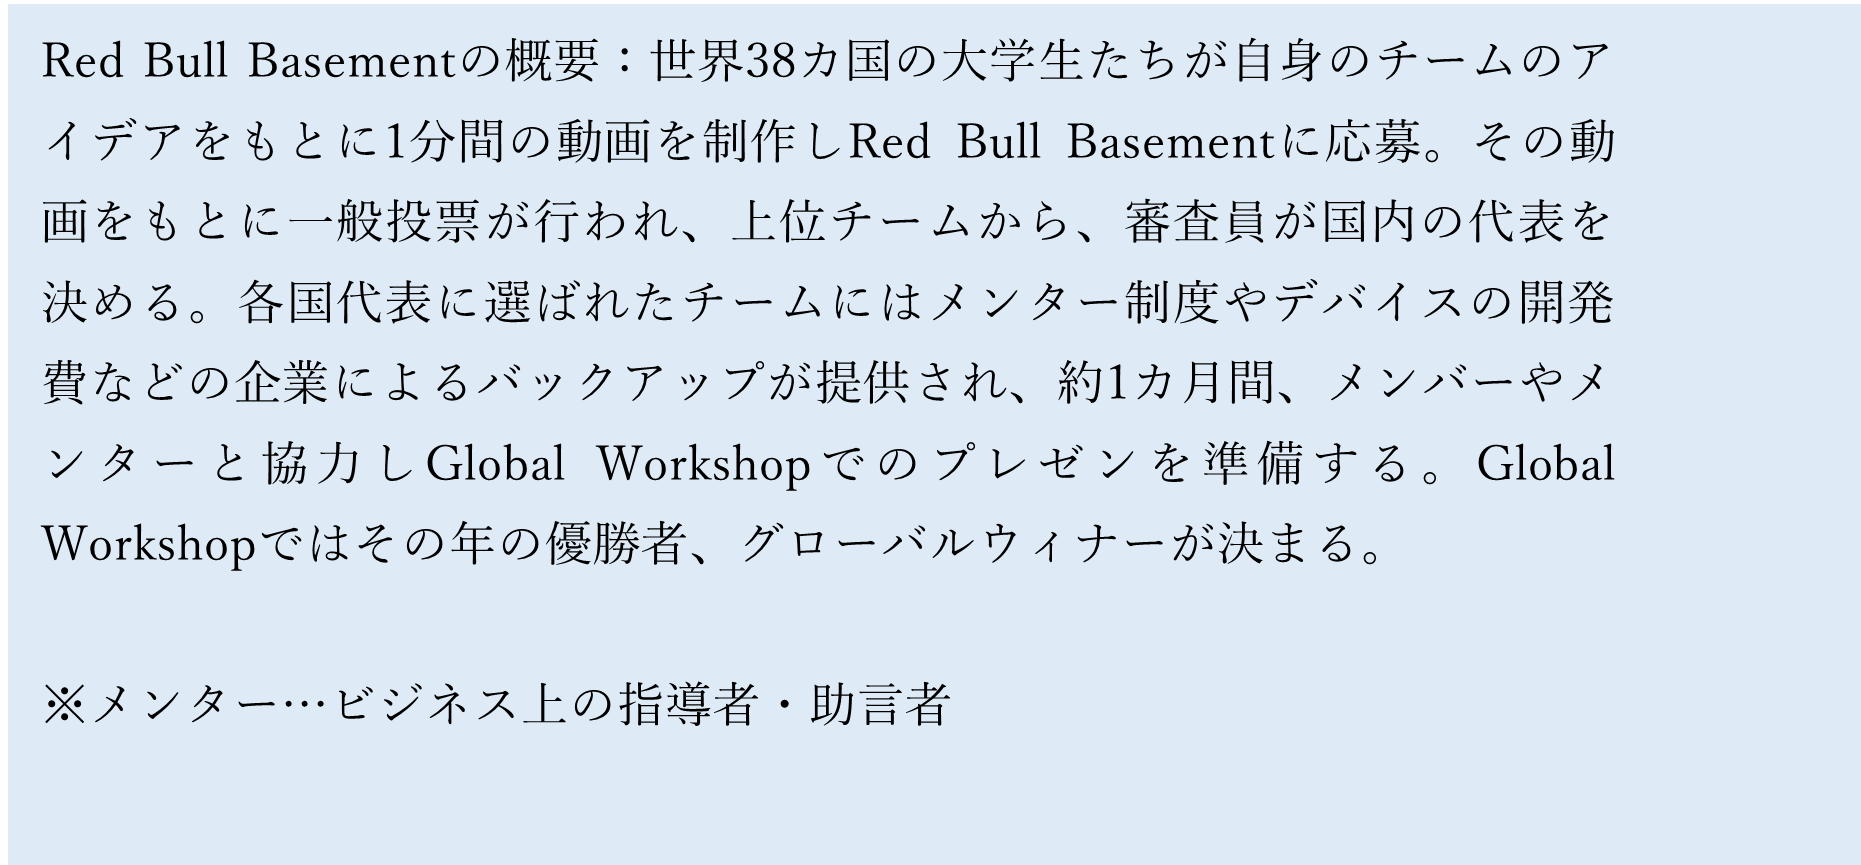 Red Bull Basement 記事挿絵